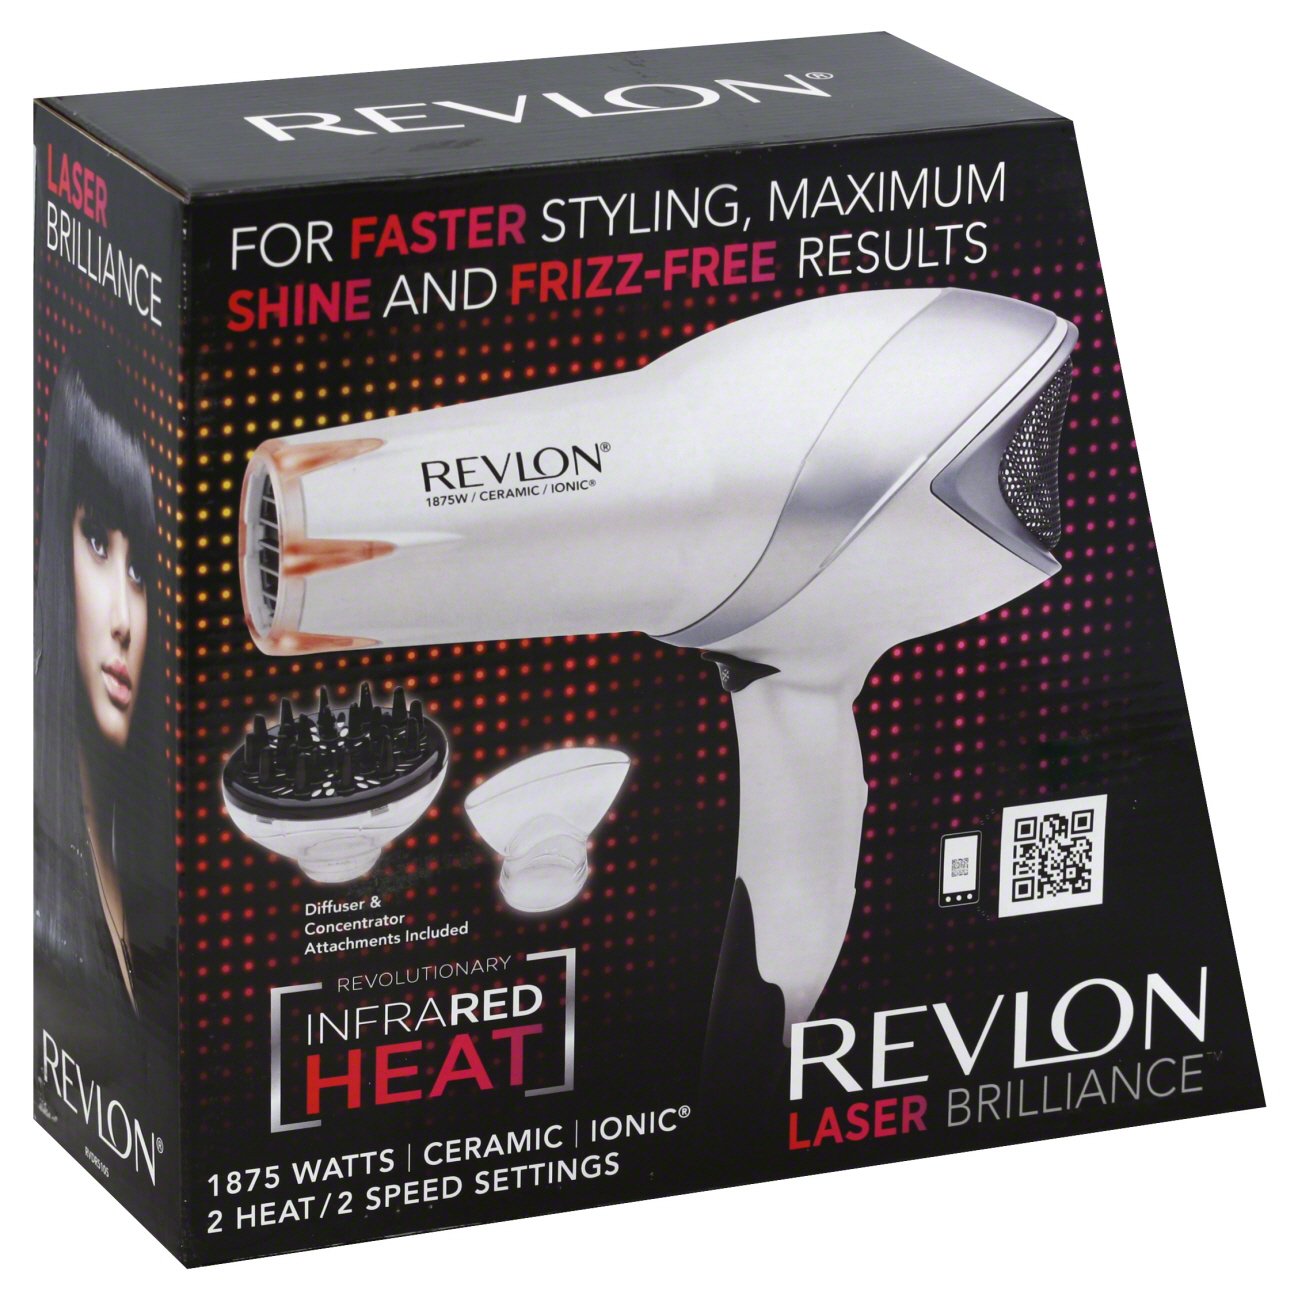 Revlon Laser Brilliance Hair Dryer - Shop Hair Dryers at H-E-B